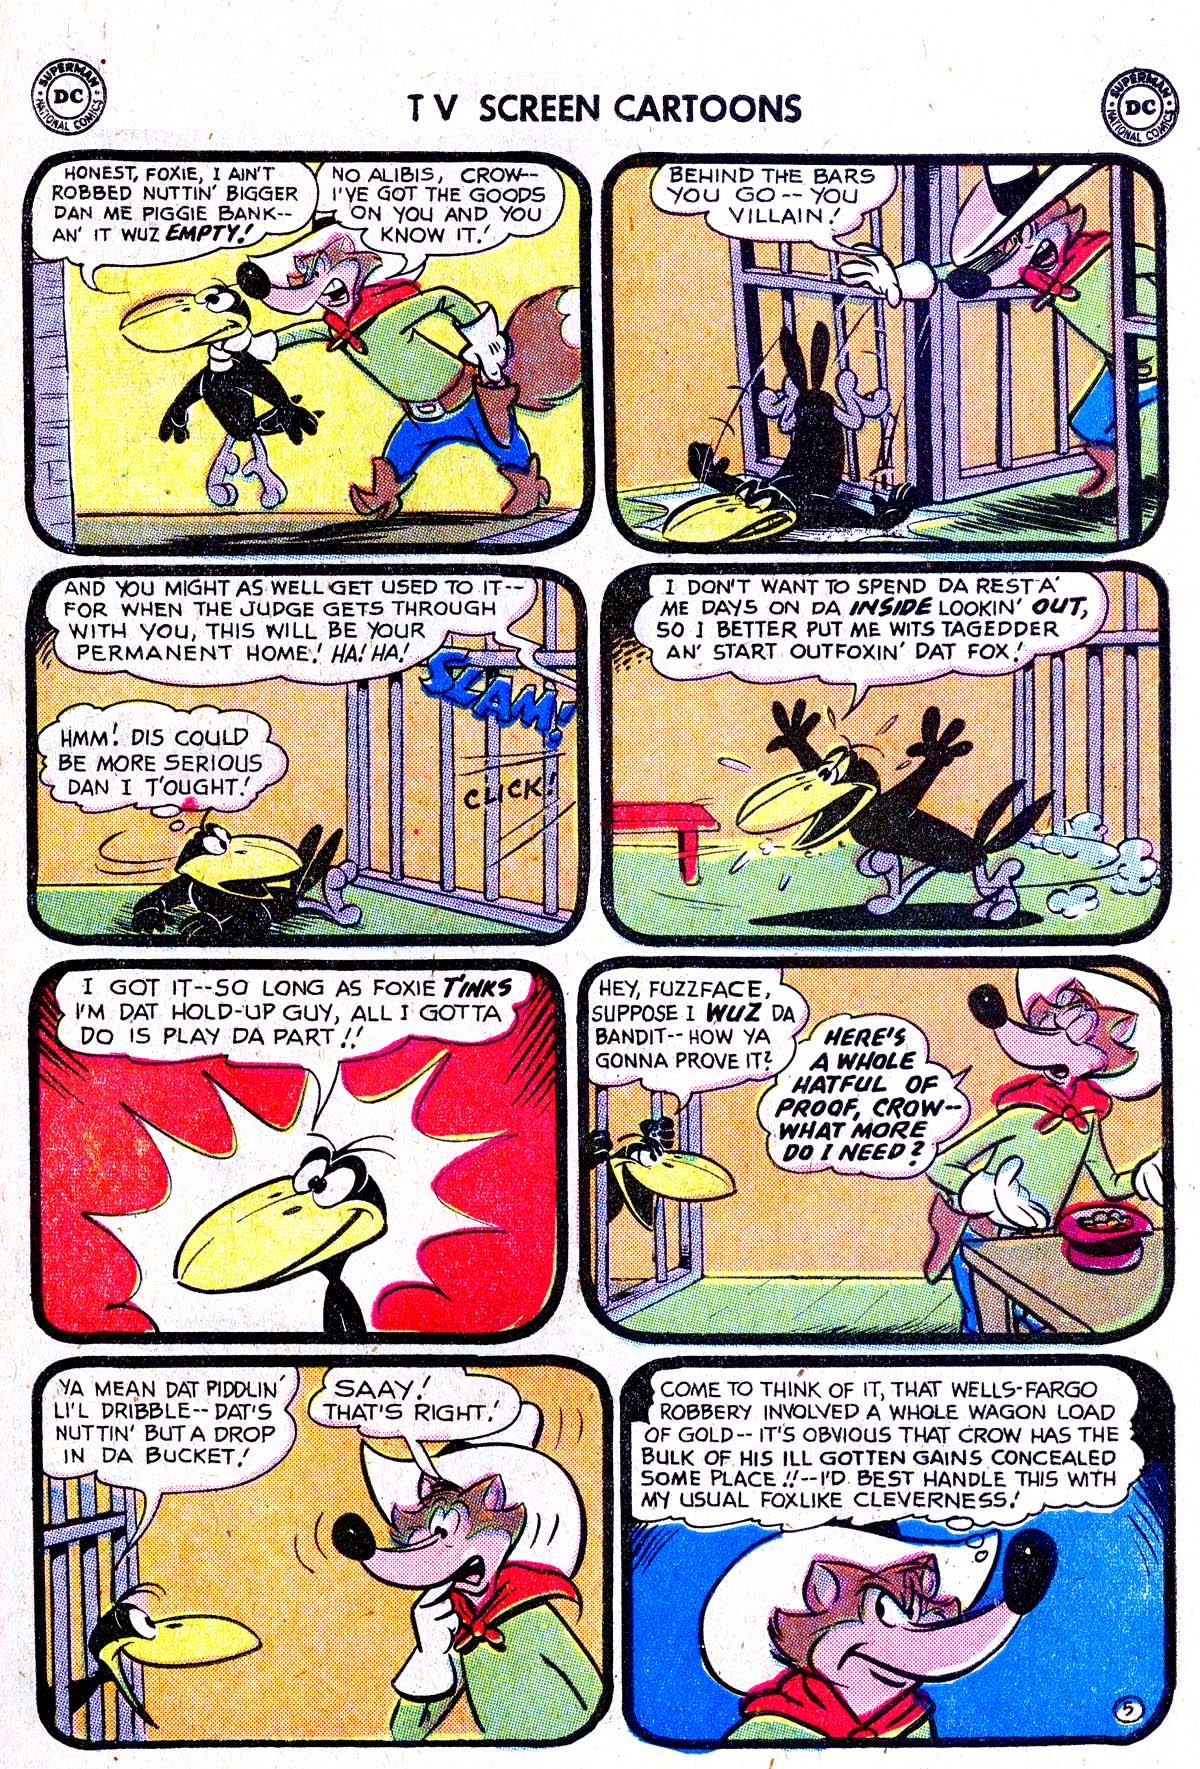 Read online TV Screen Cartoons comic -  Issue #130 - 7